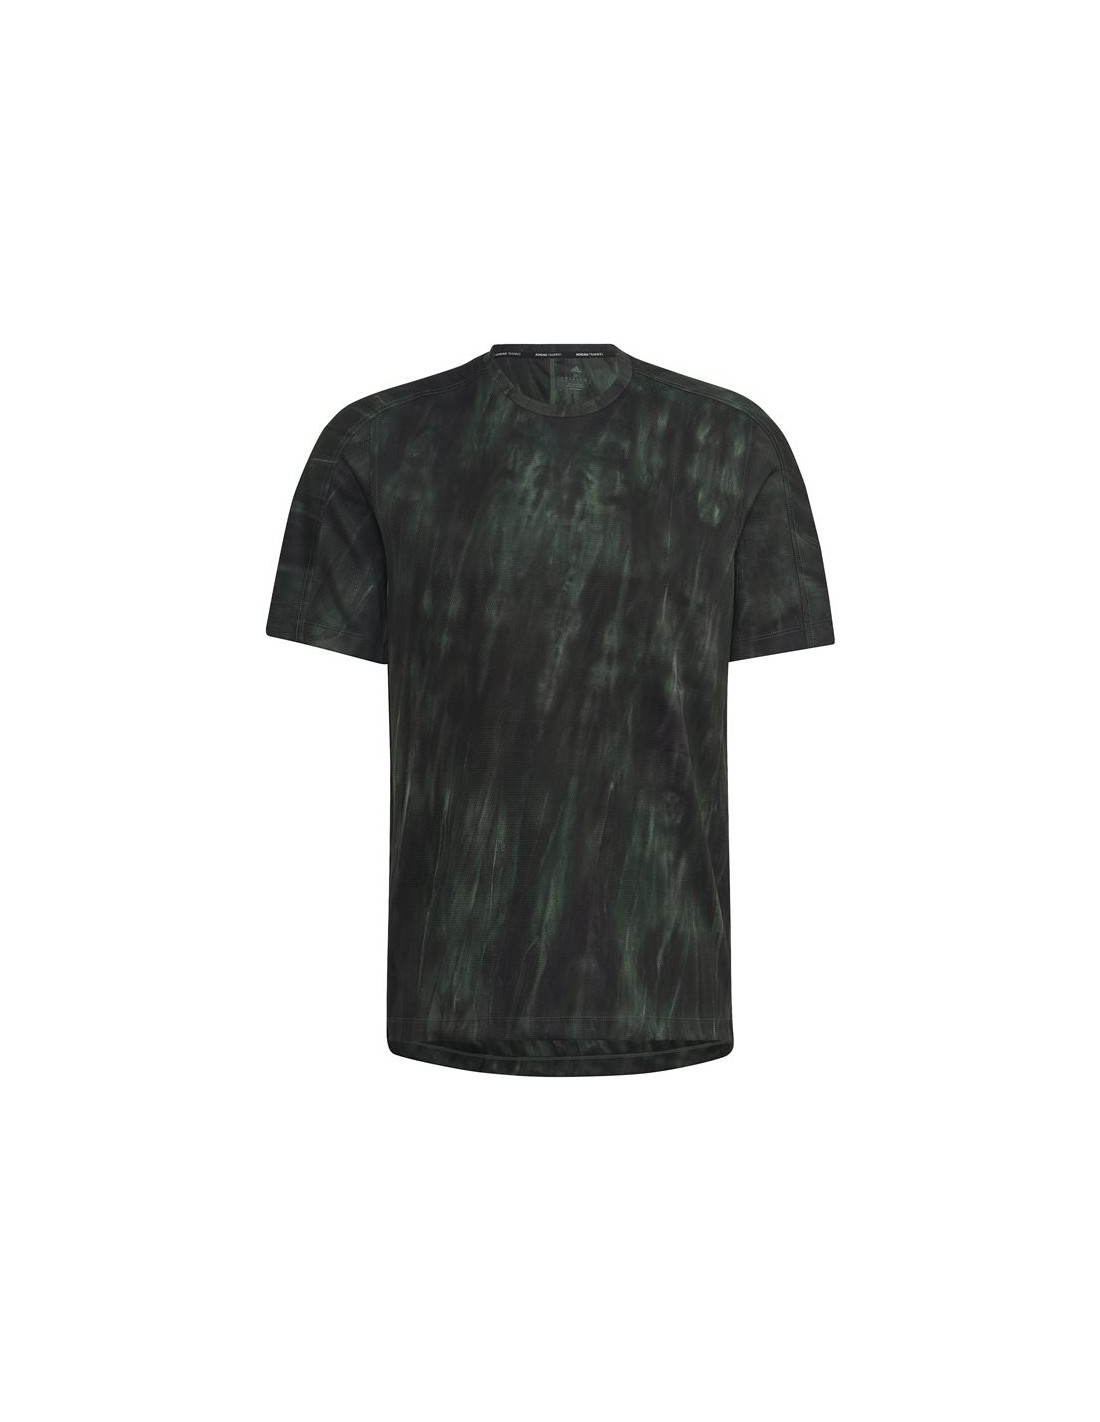 Camiseta adidas workout spray dye hombre green